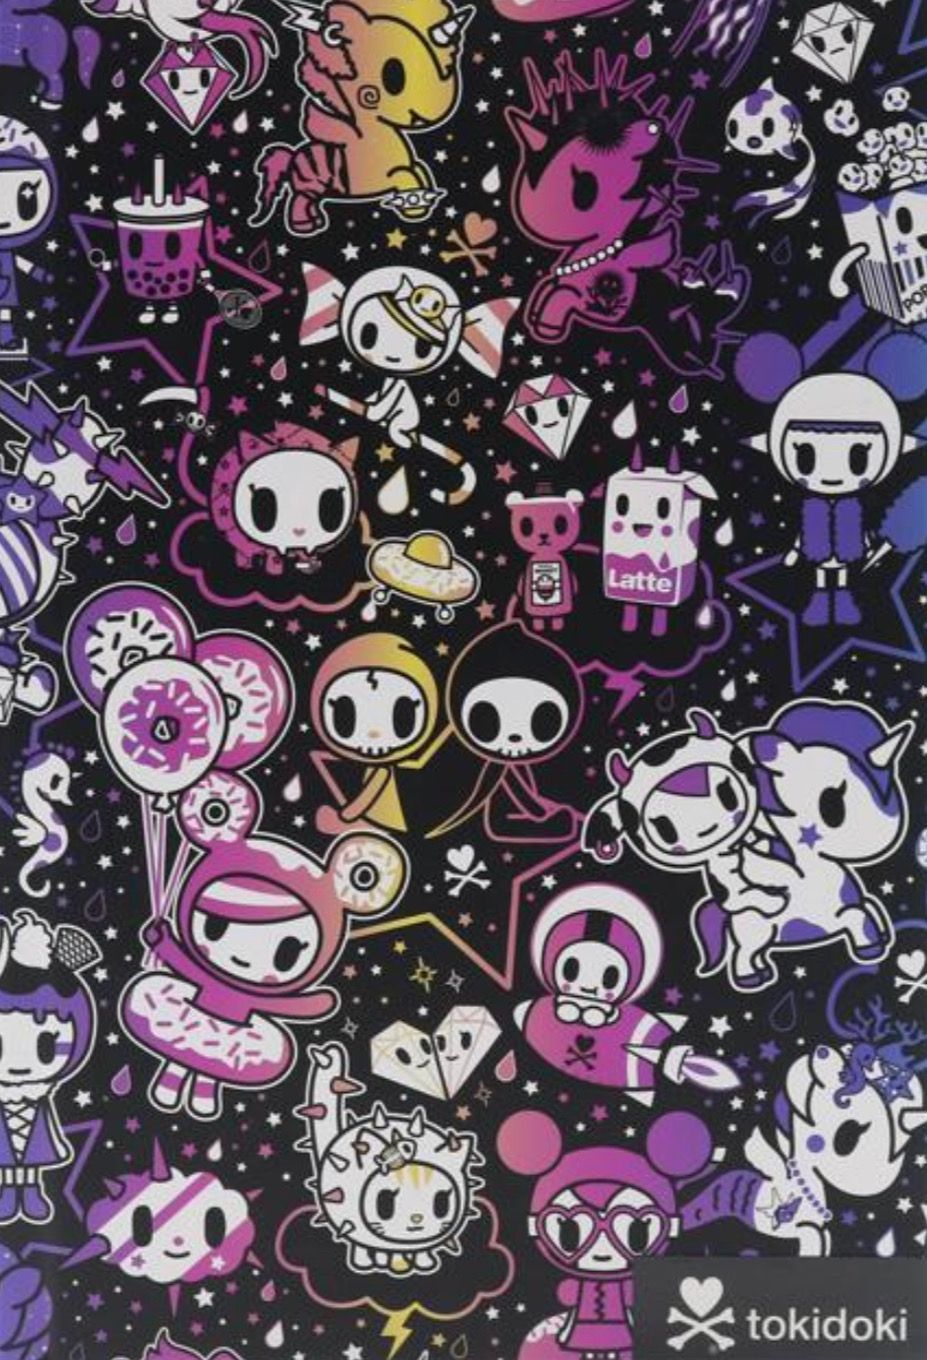 Tokidoki. Tokidoki characters, Cute doodles, Hello kitty wallpaper